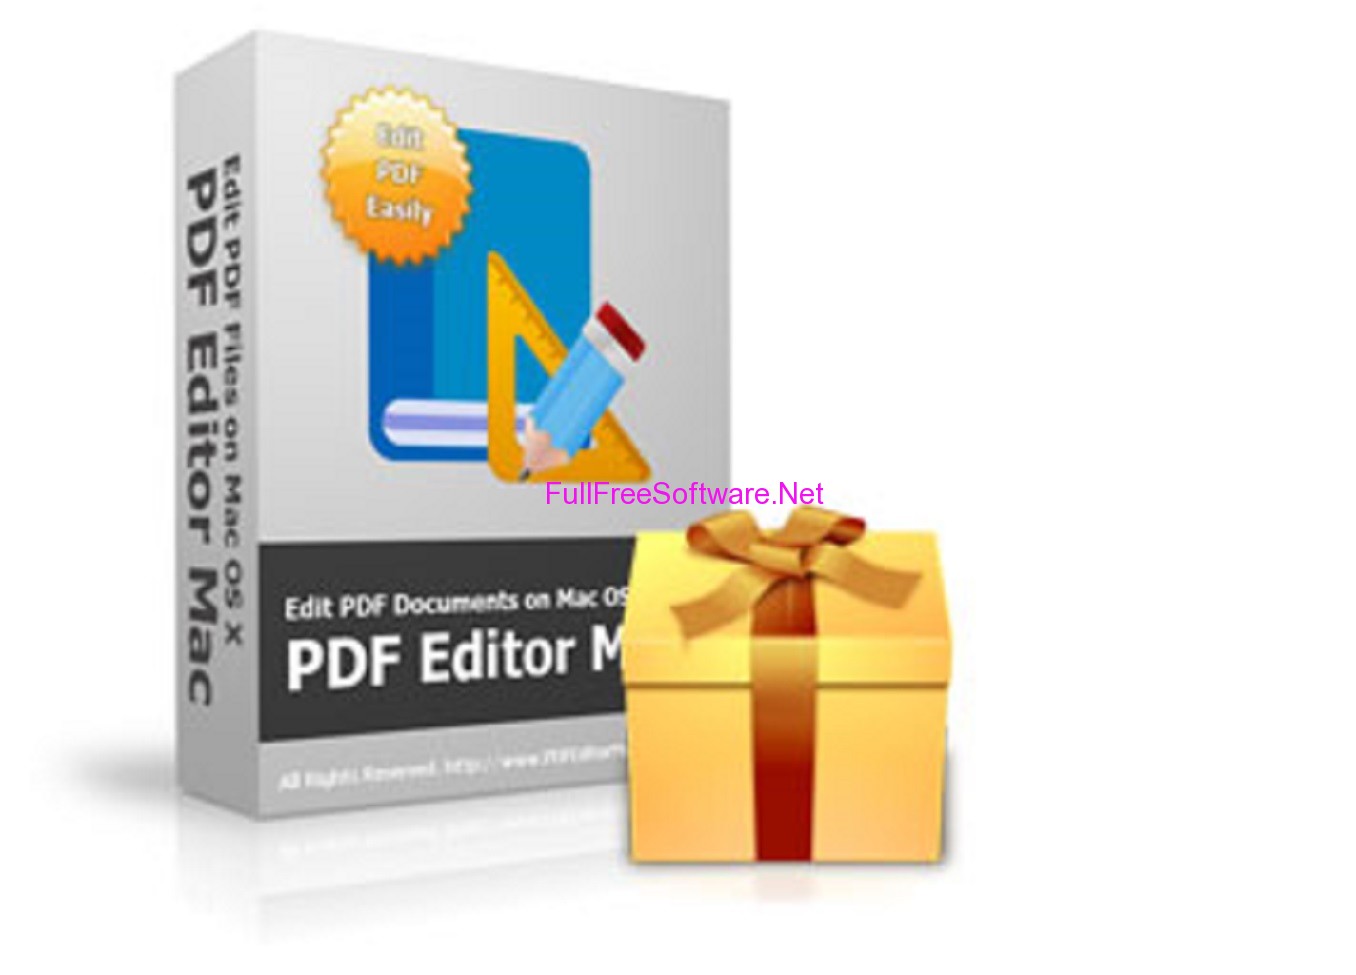 Pdf editor free. download full version for mac